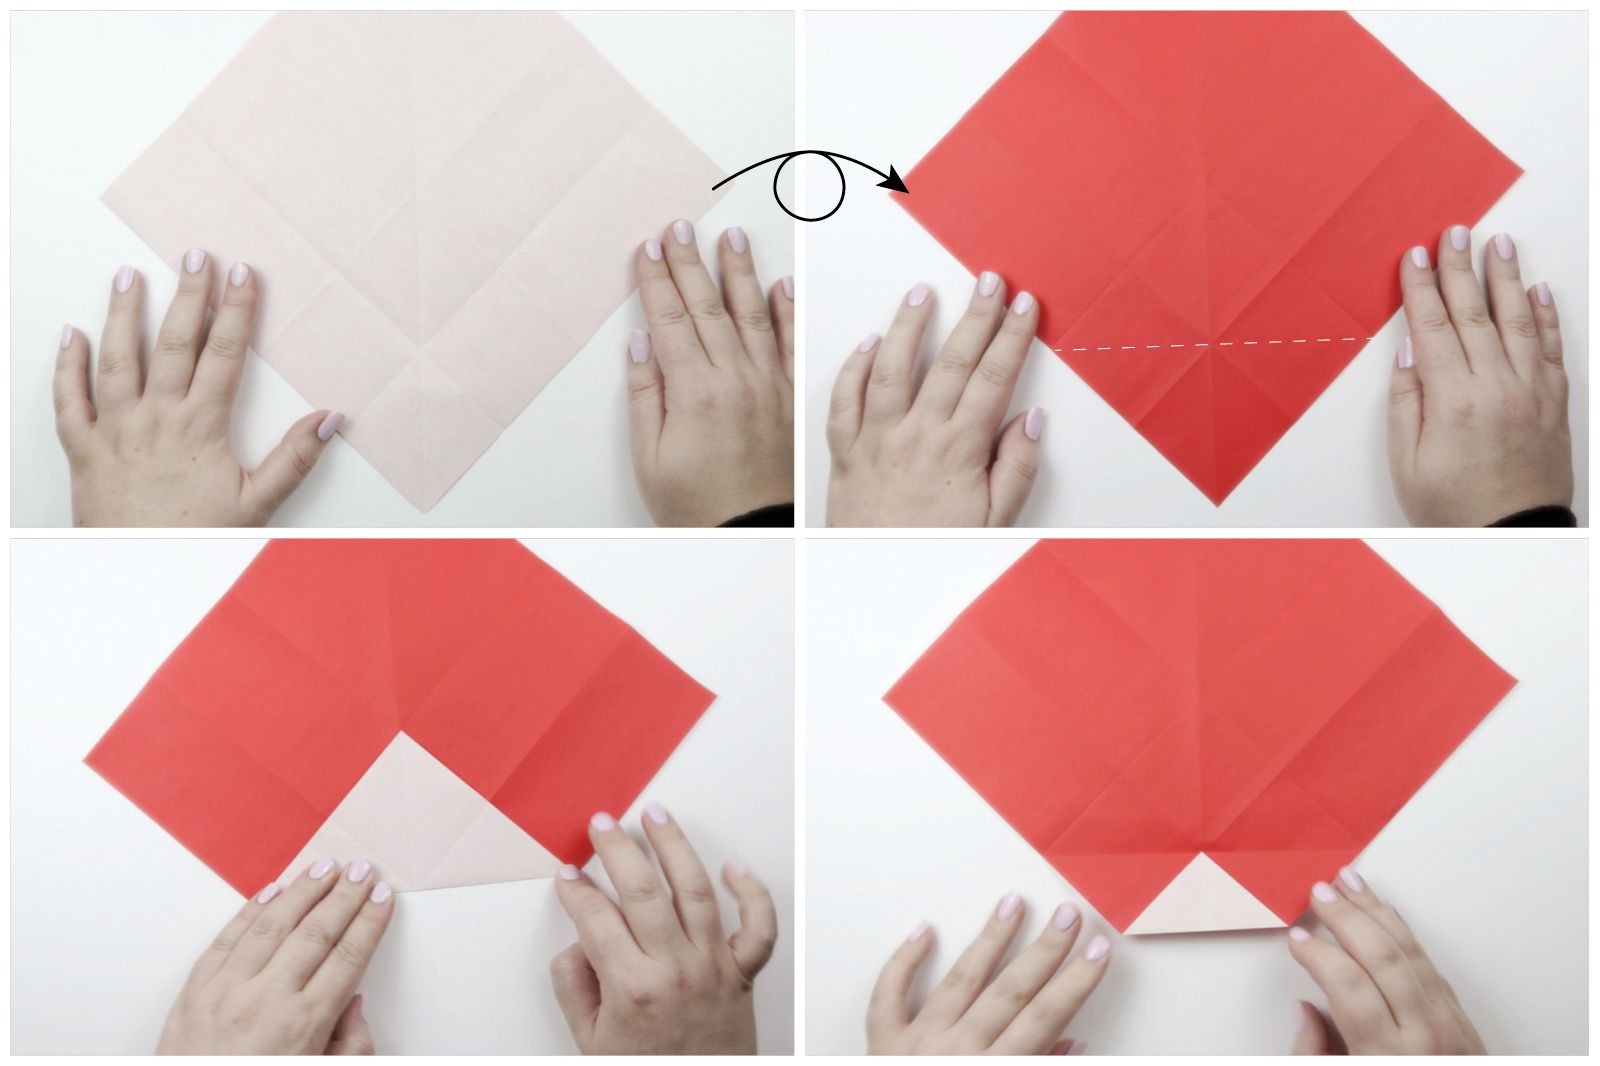 How To Make A Origami Santa How To Make A Cute Origami Santa